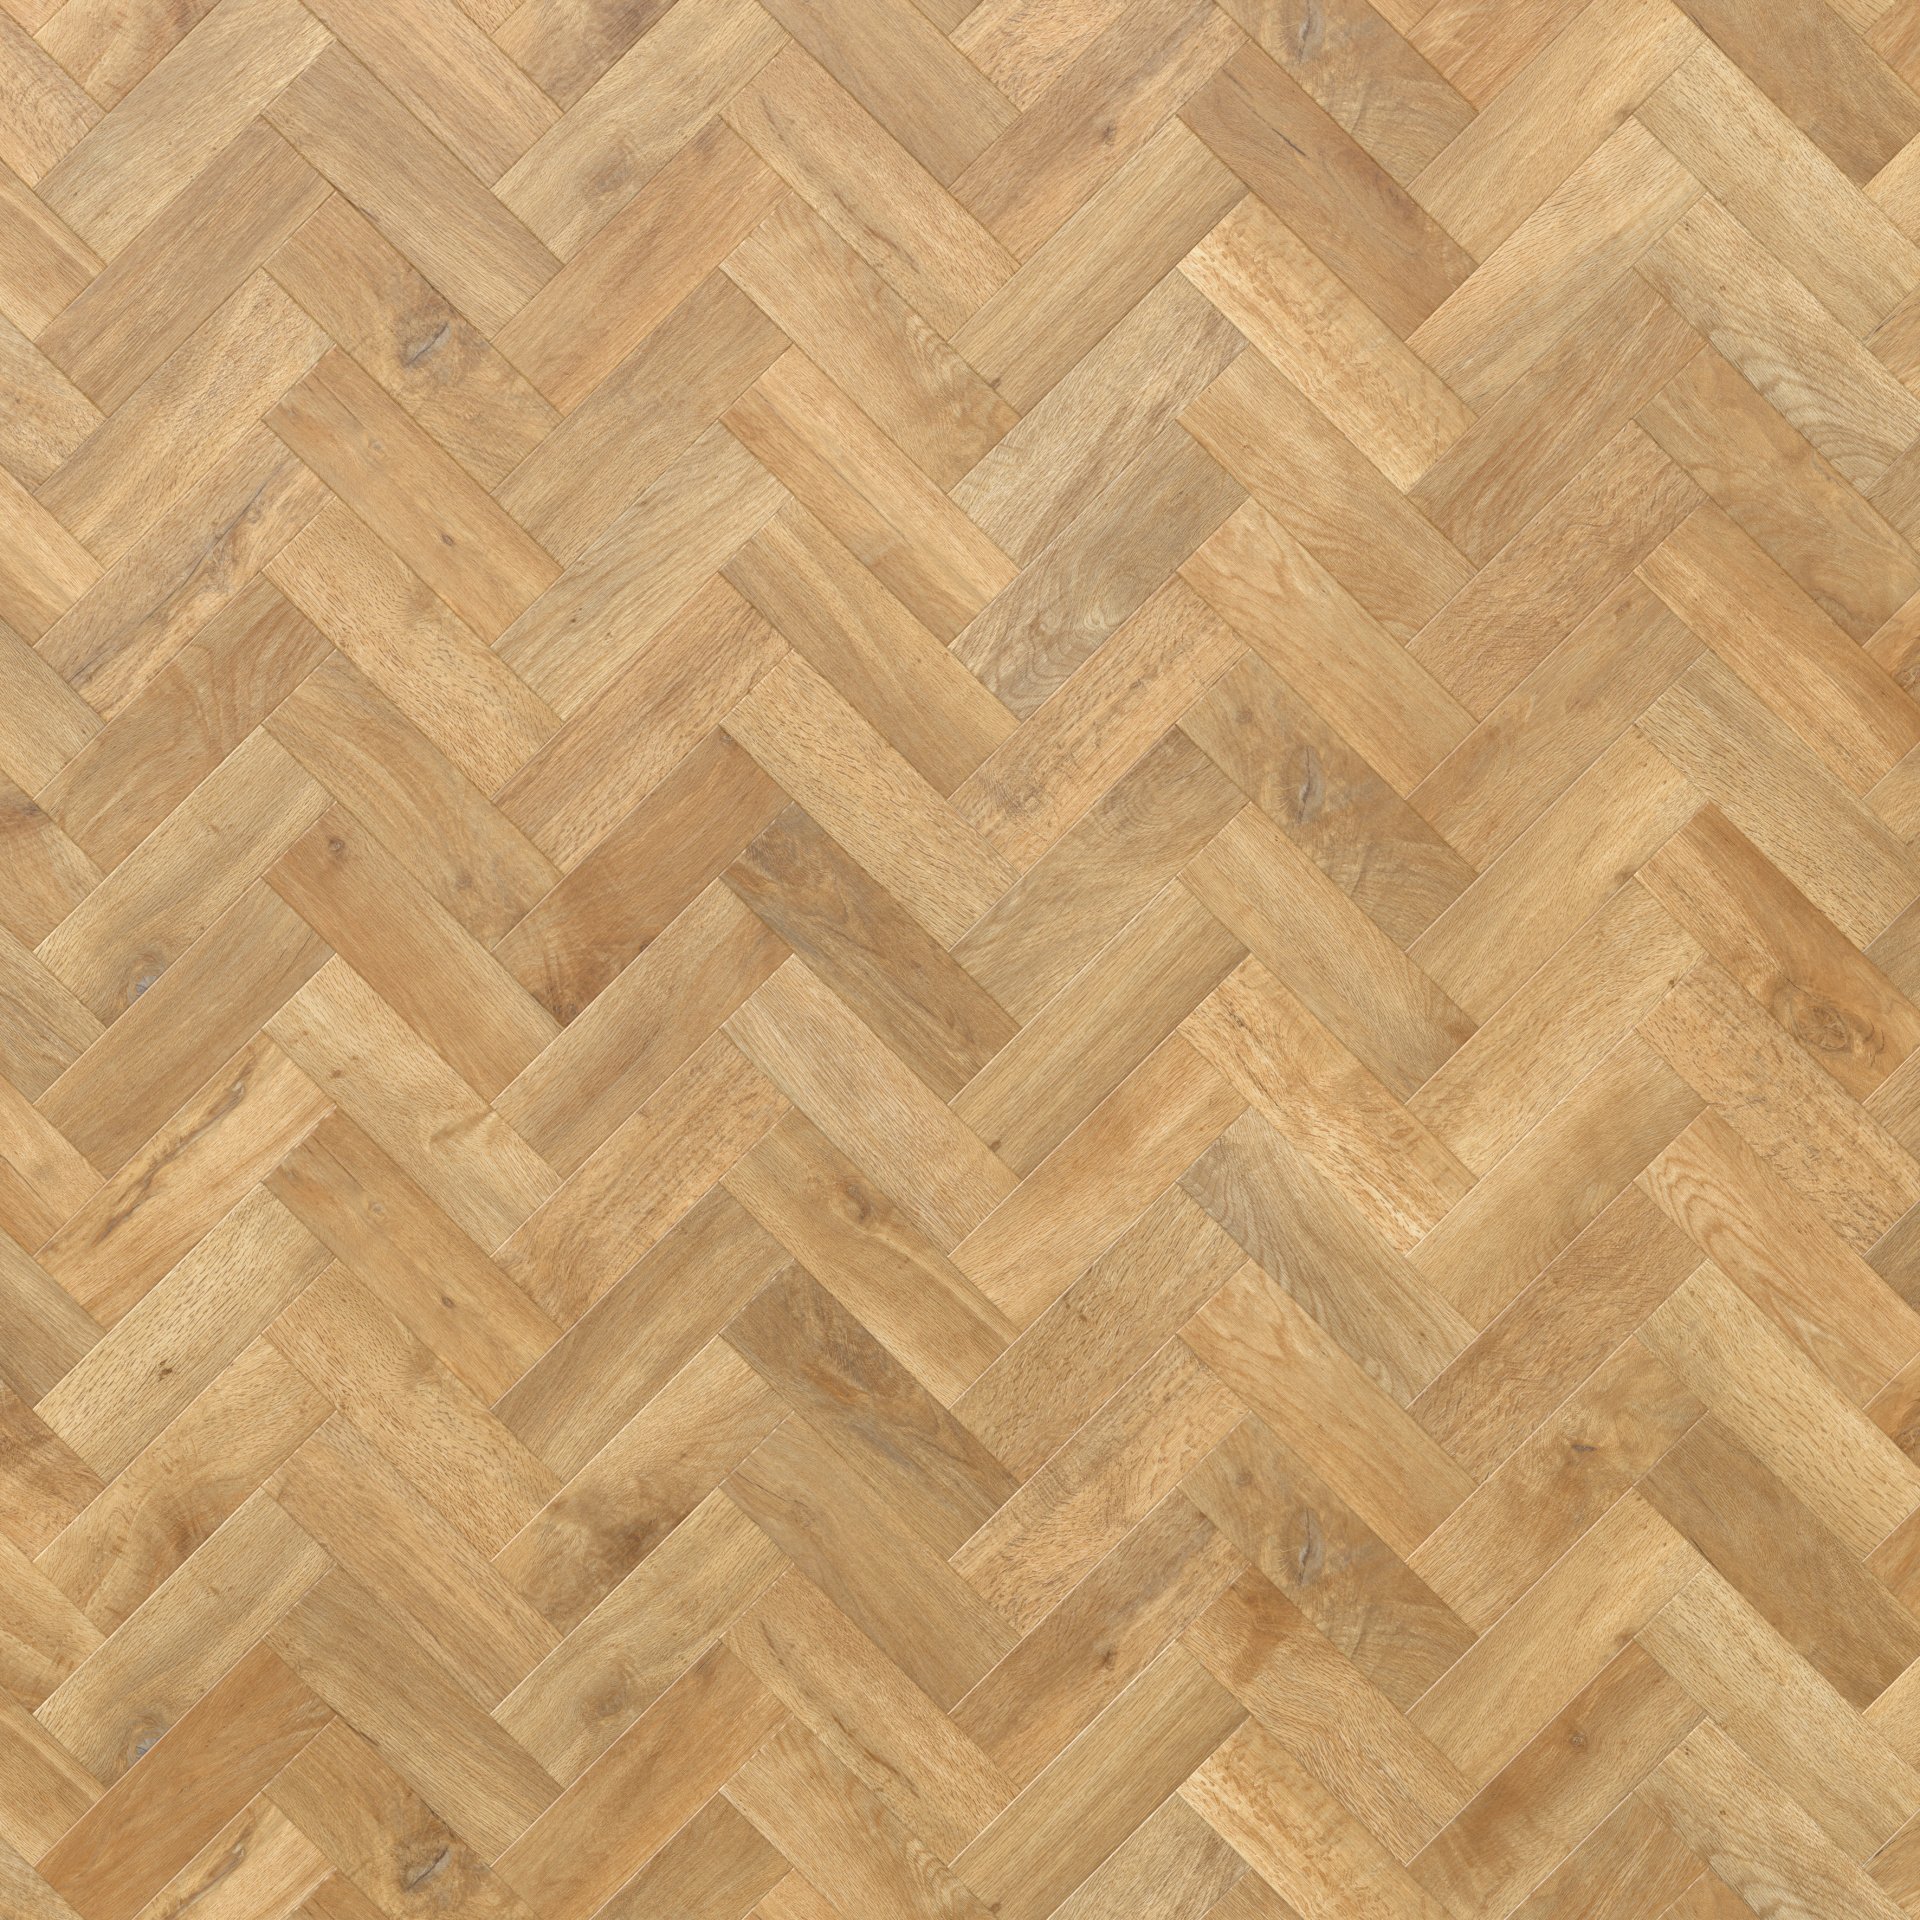 Karndean Art Select Wood - Blond Oak Parquet AP01 Safety Flooring